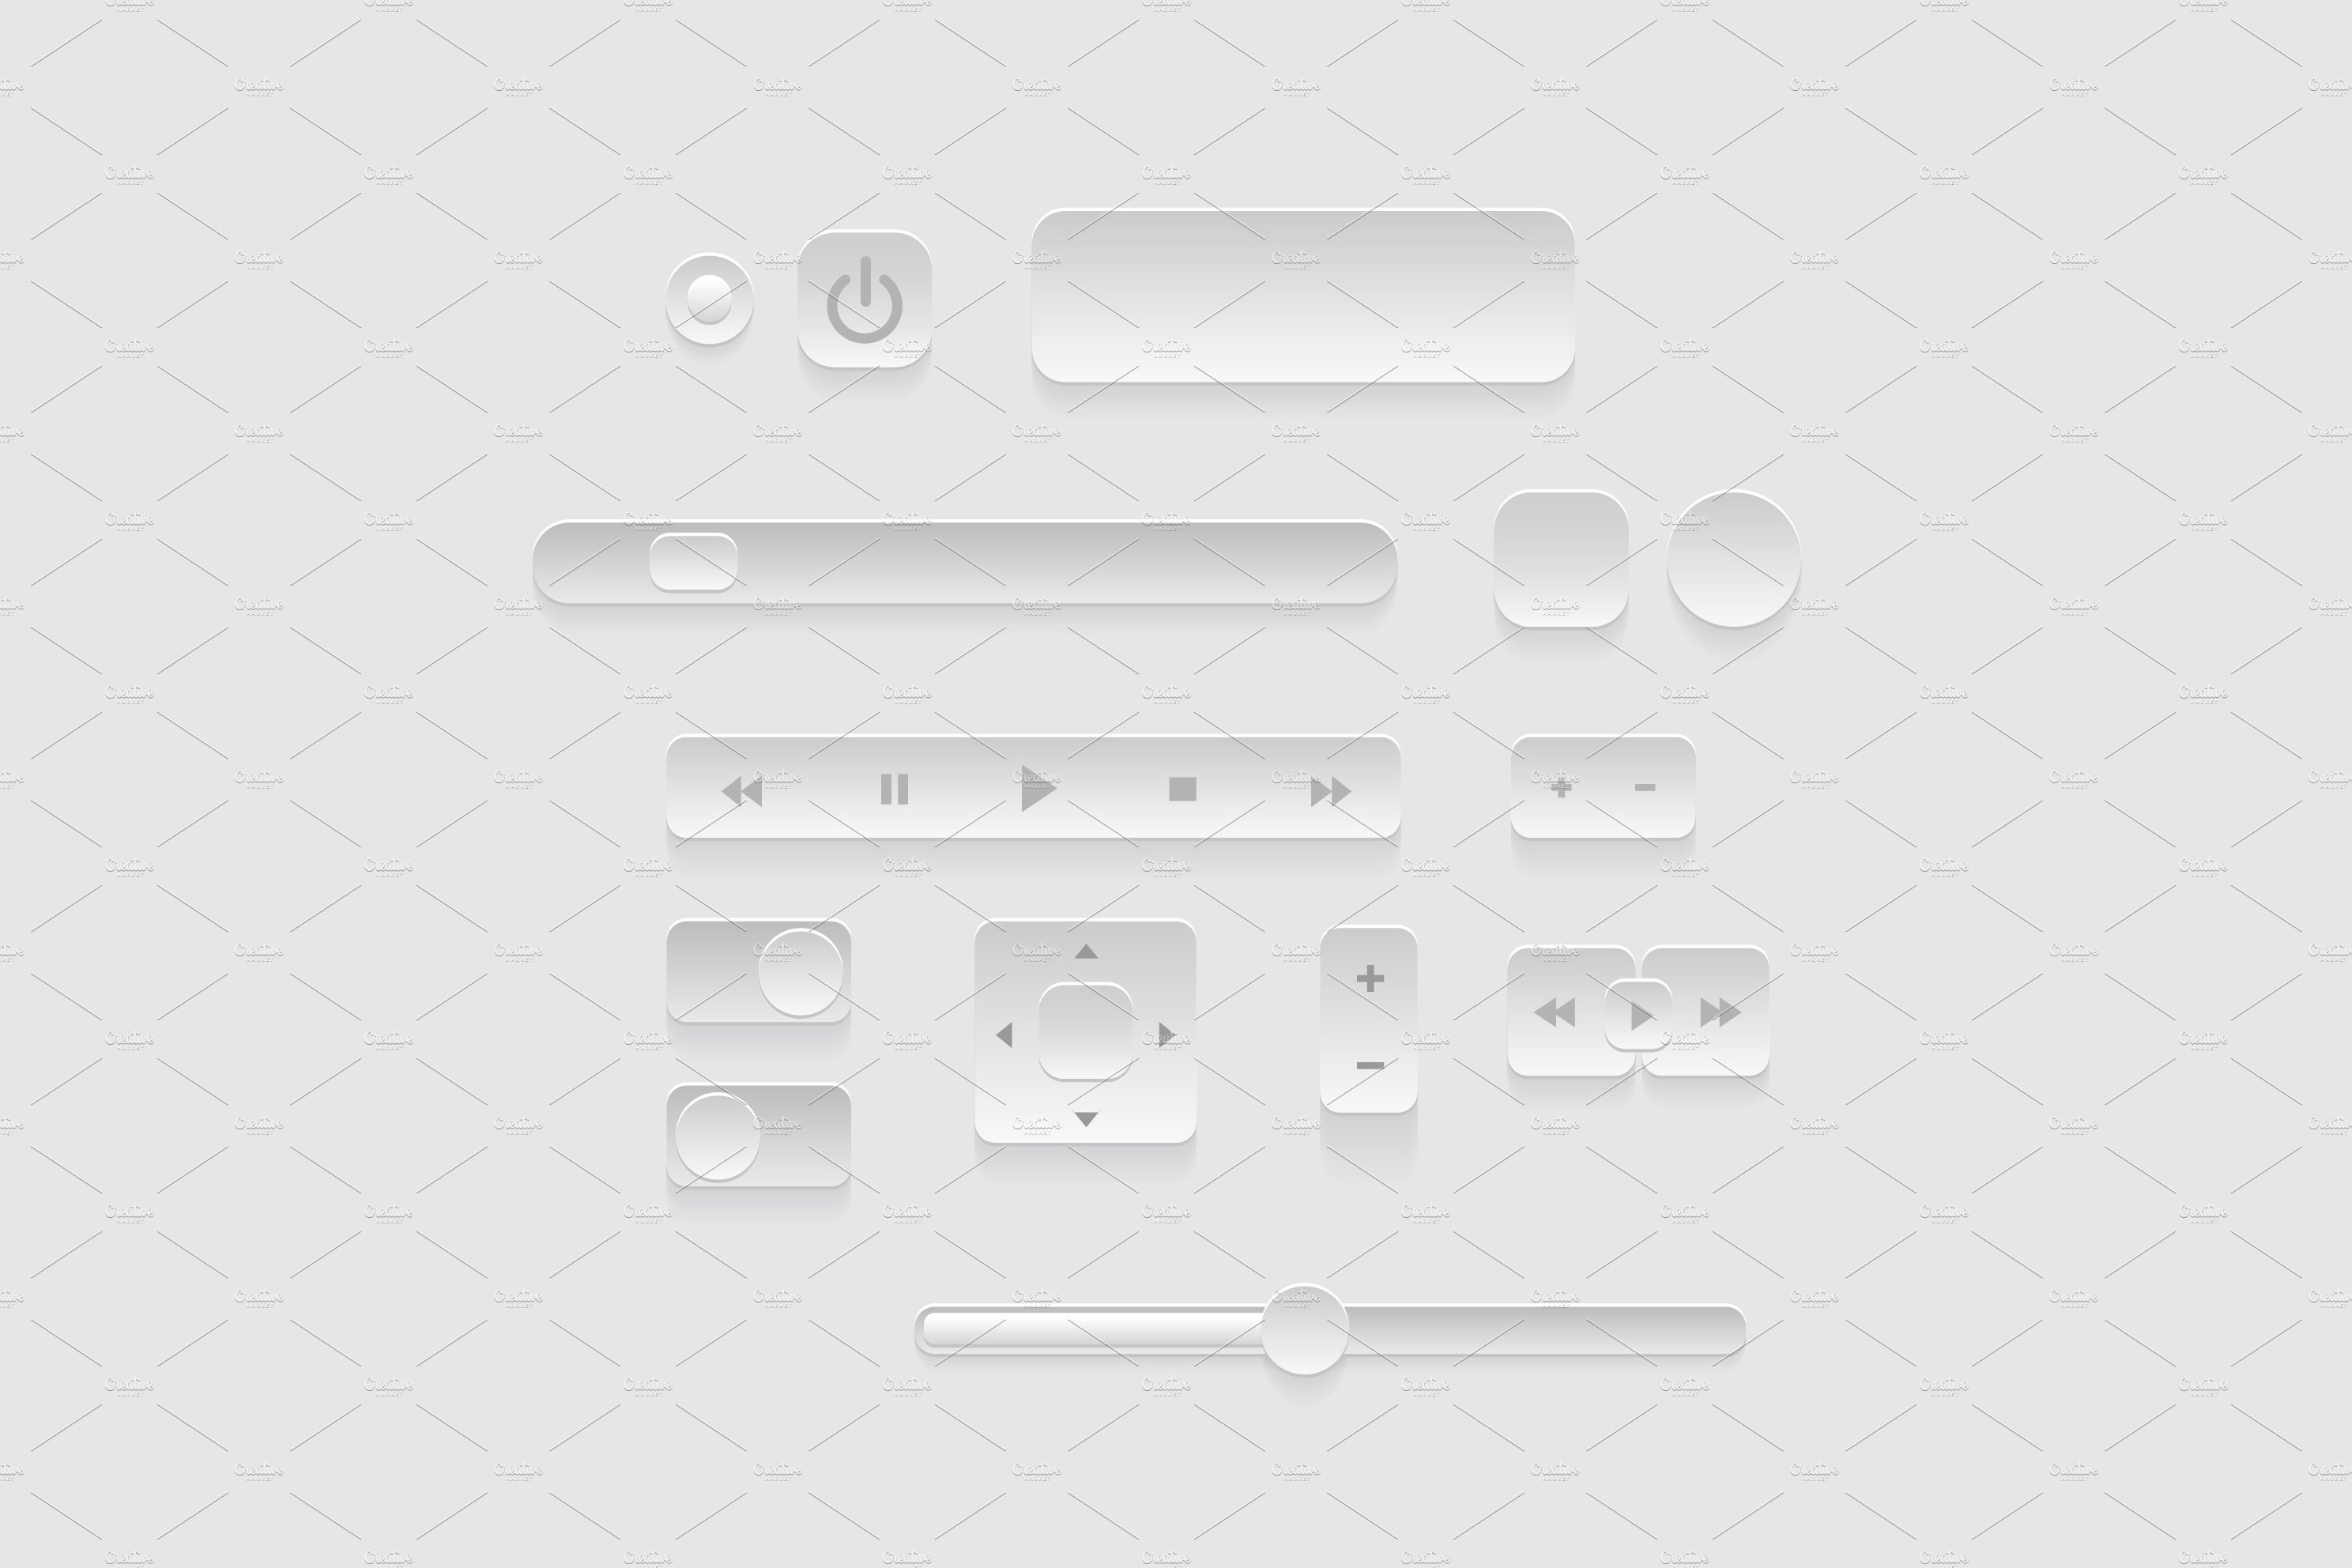 Light Web UI Elements. Buttons preview image.